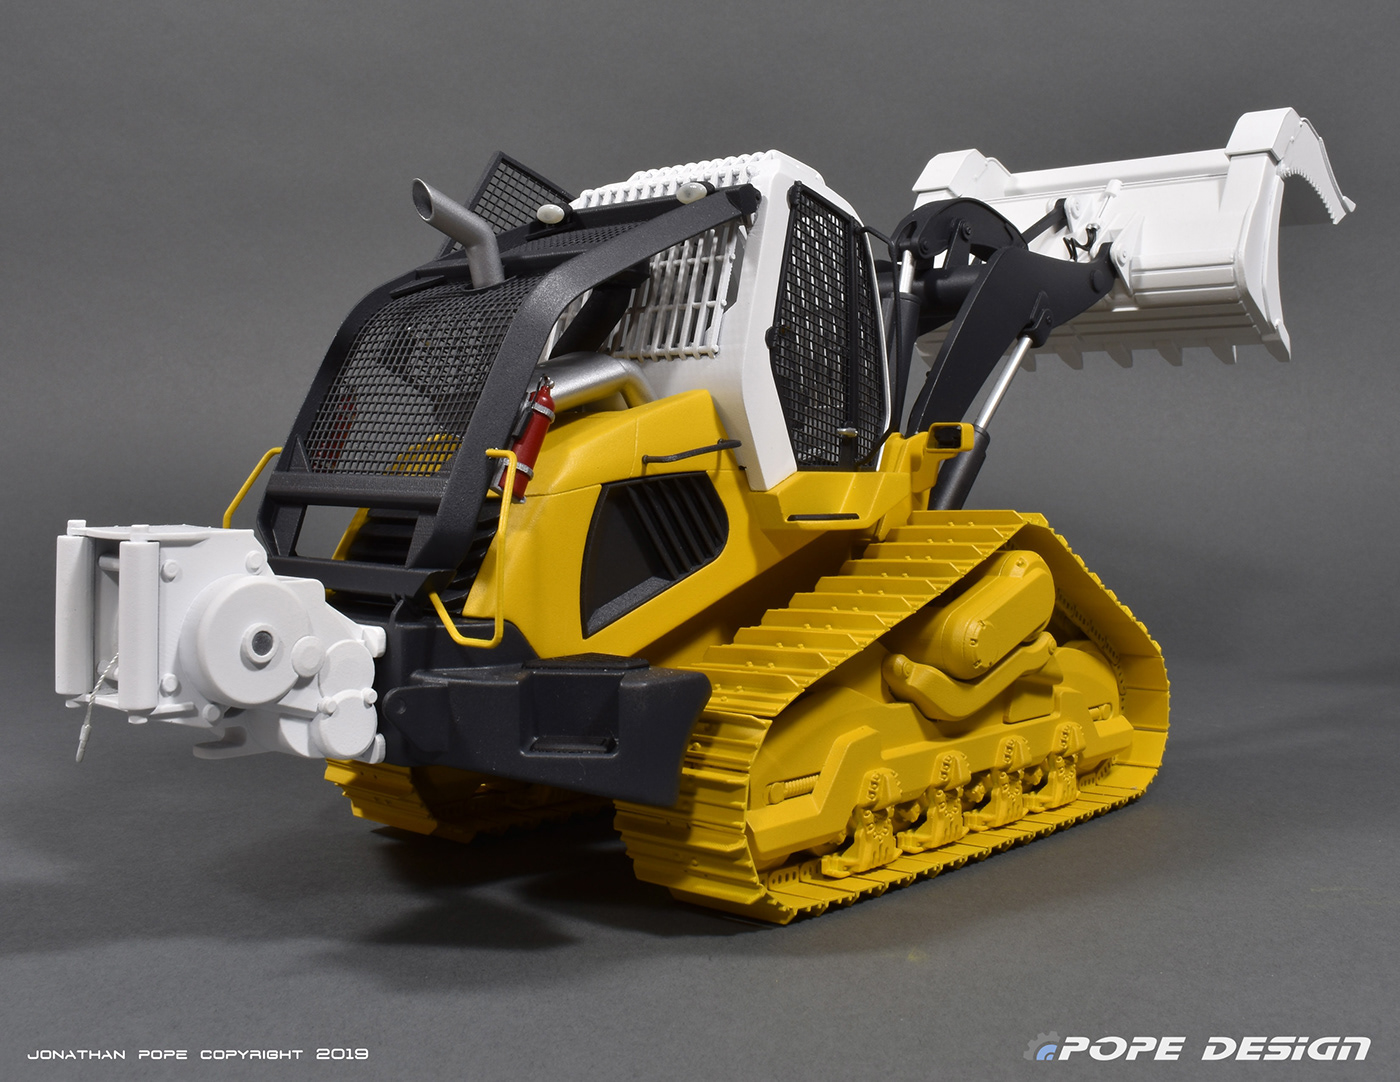 concept concept model Tractor design industrial design  Heavy Equipment bulldozer